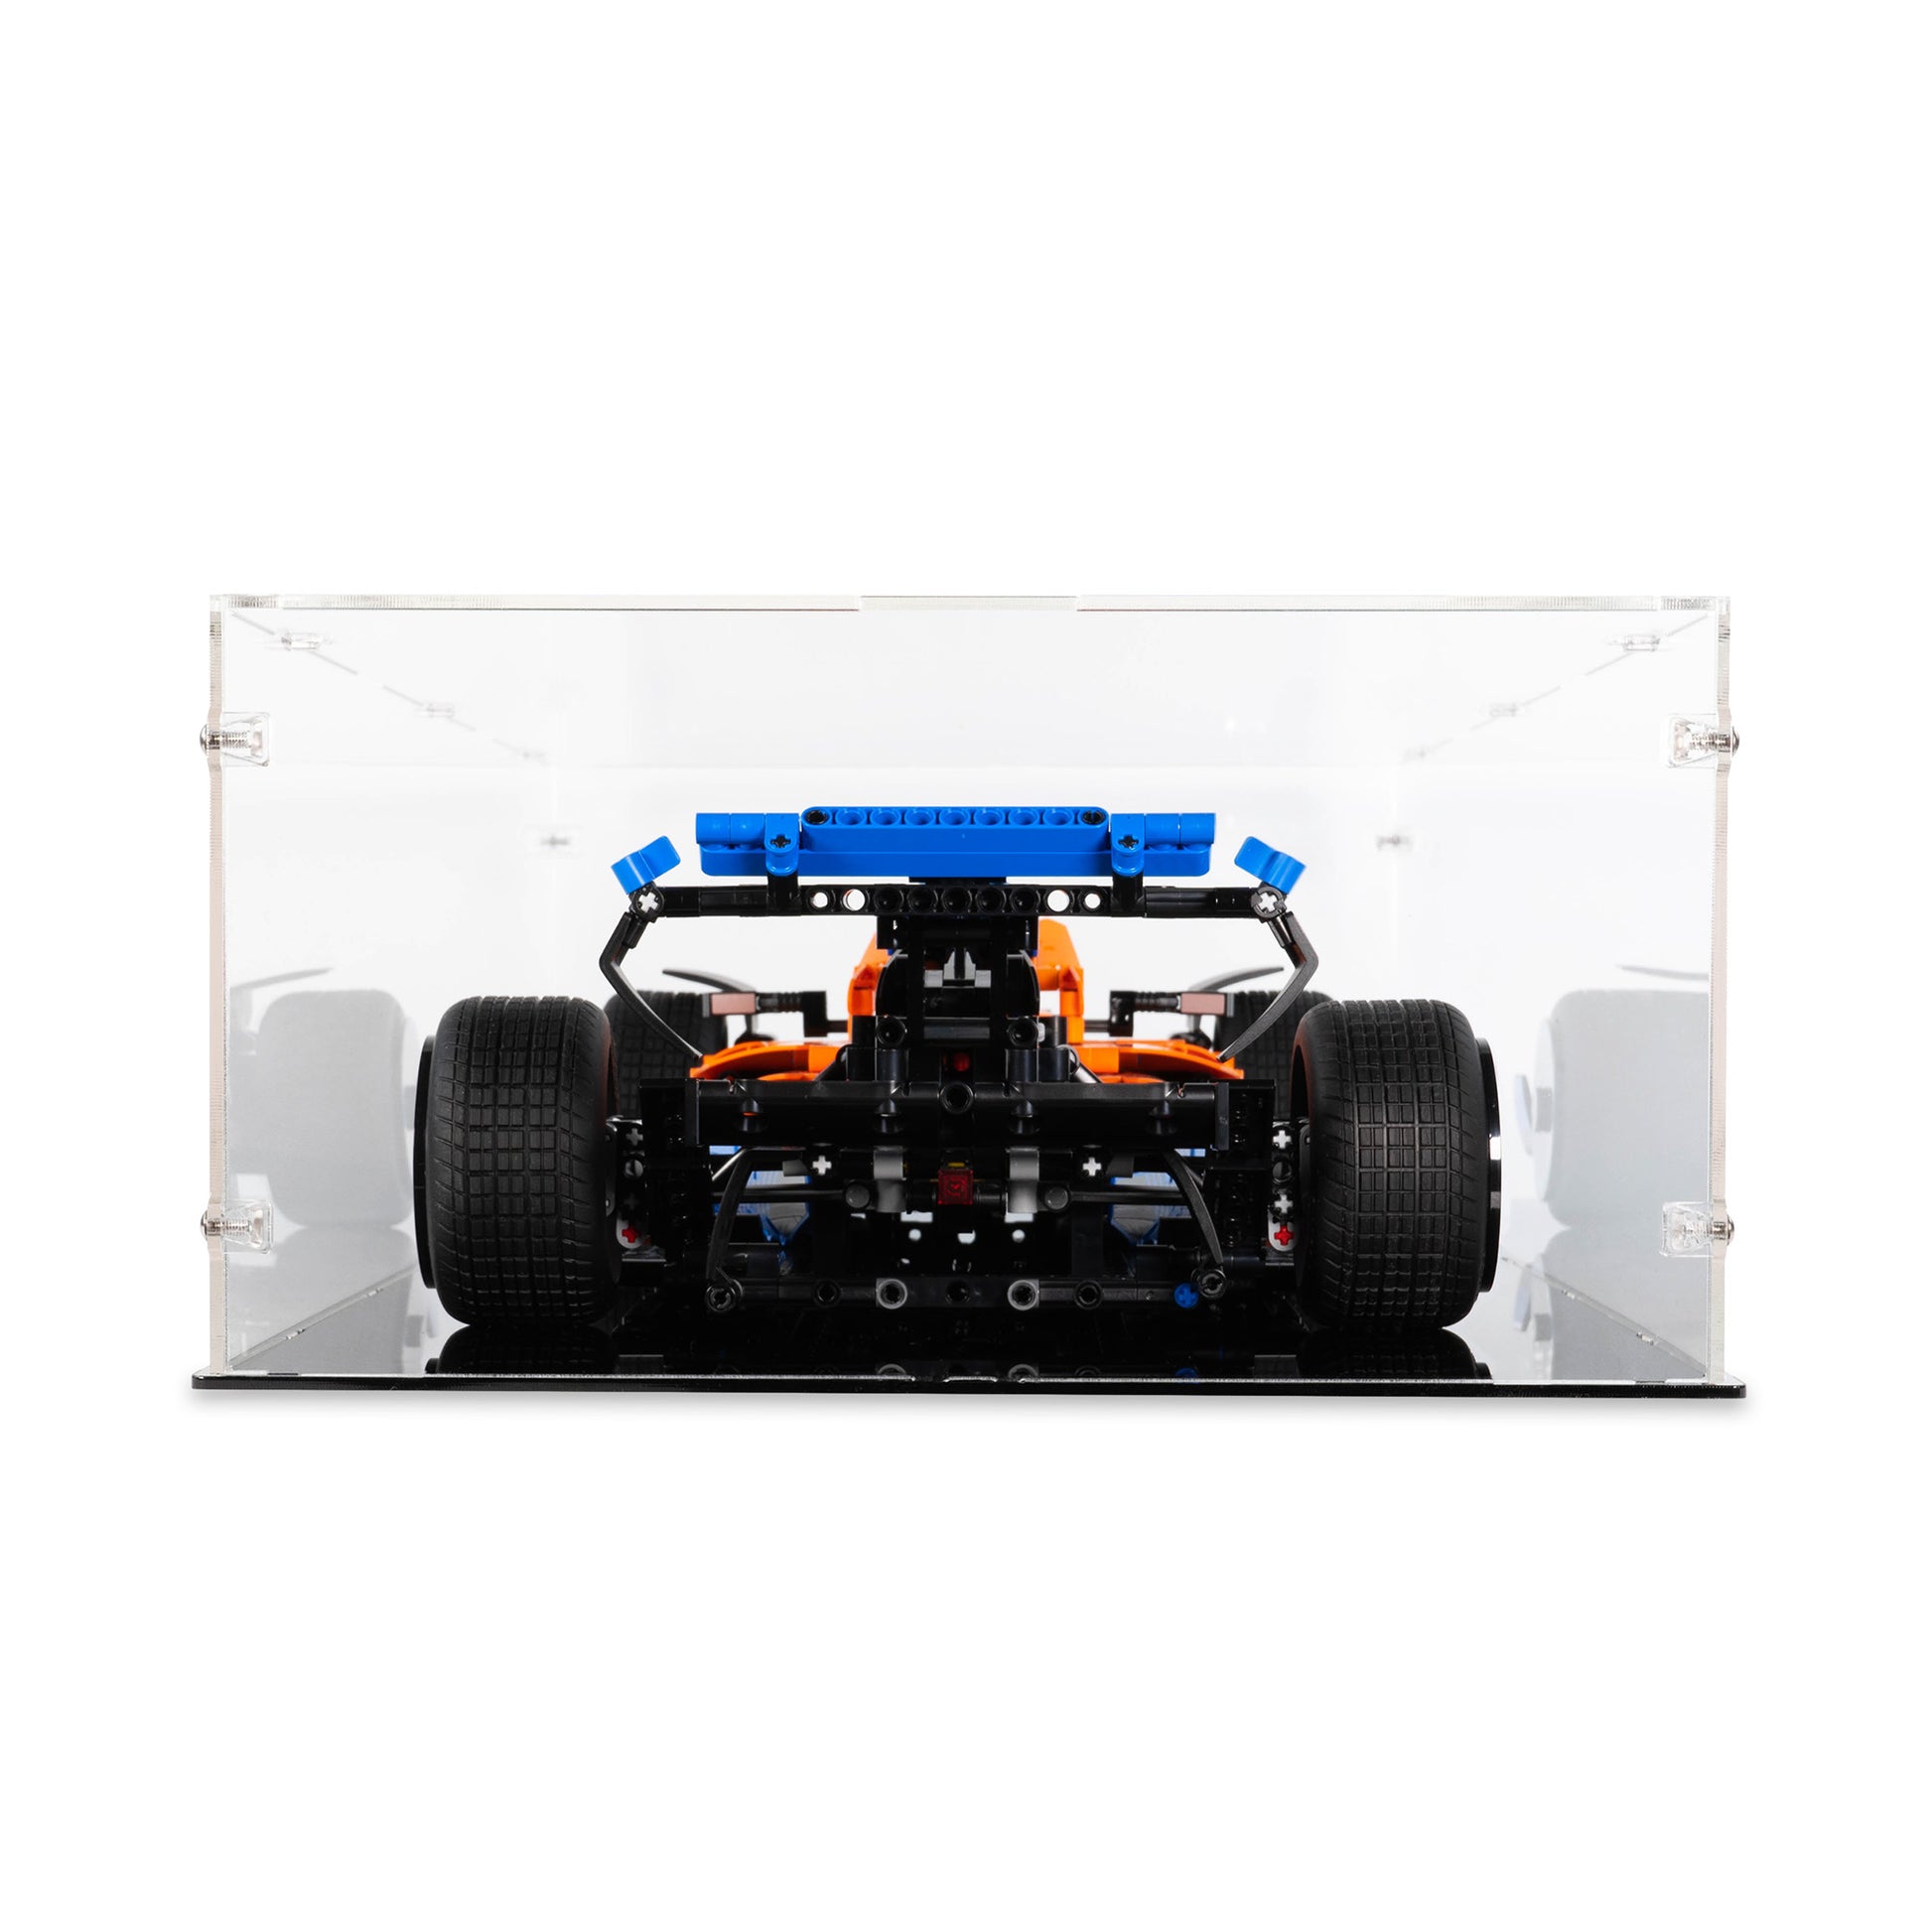 New Lego Stand for Lego Technic McLaren F1 42141 Formula 1 Race